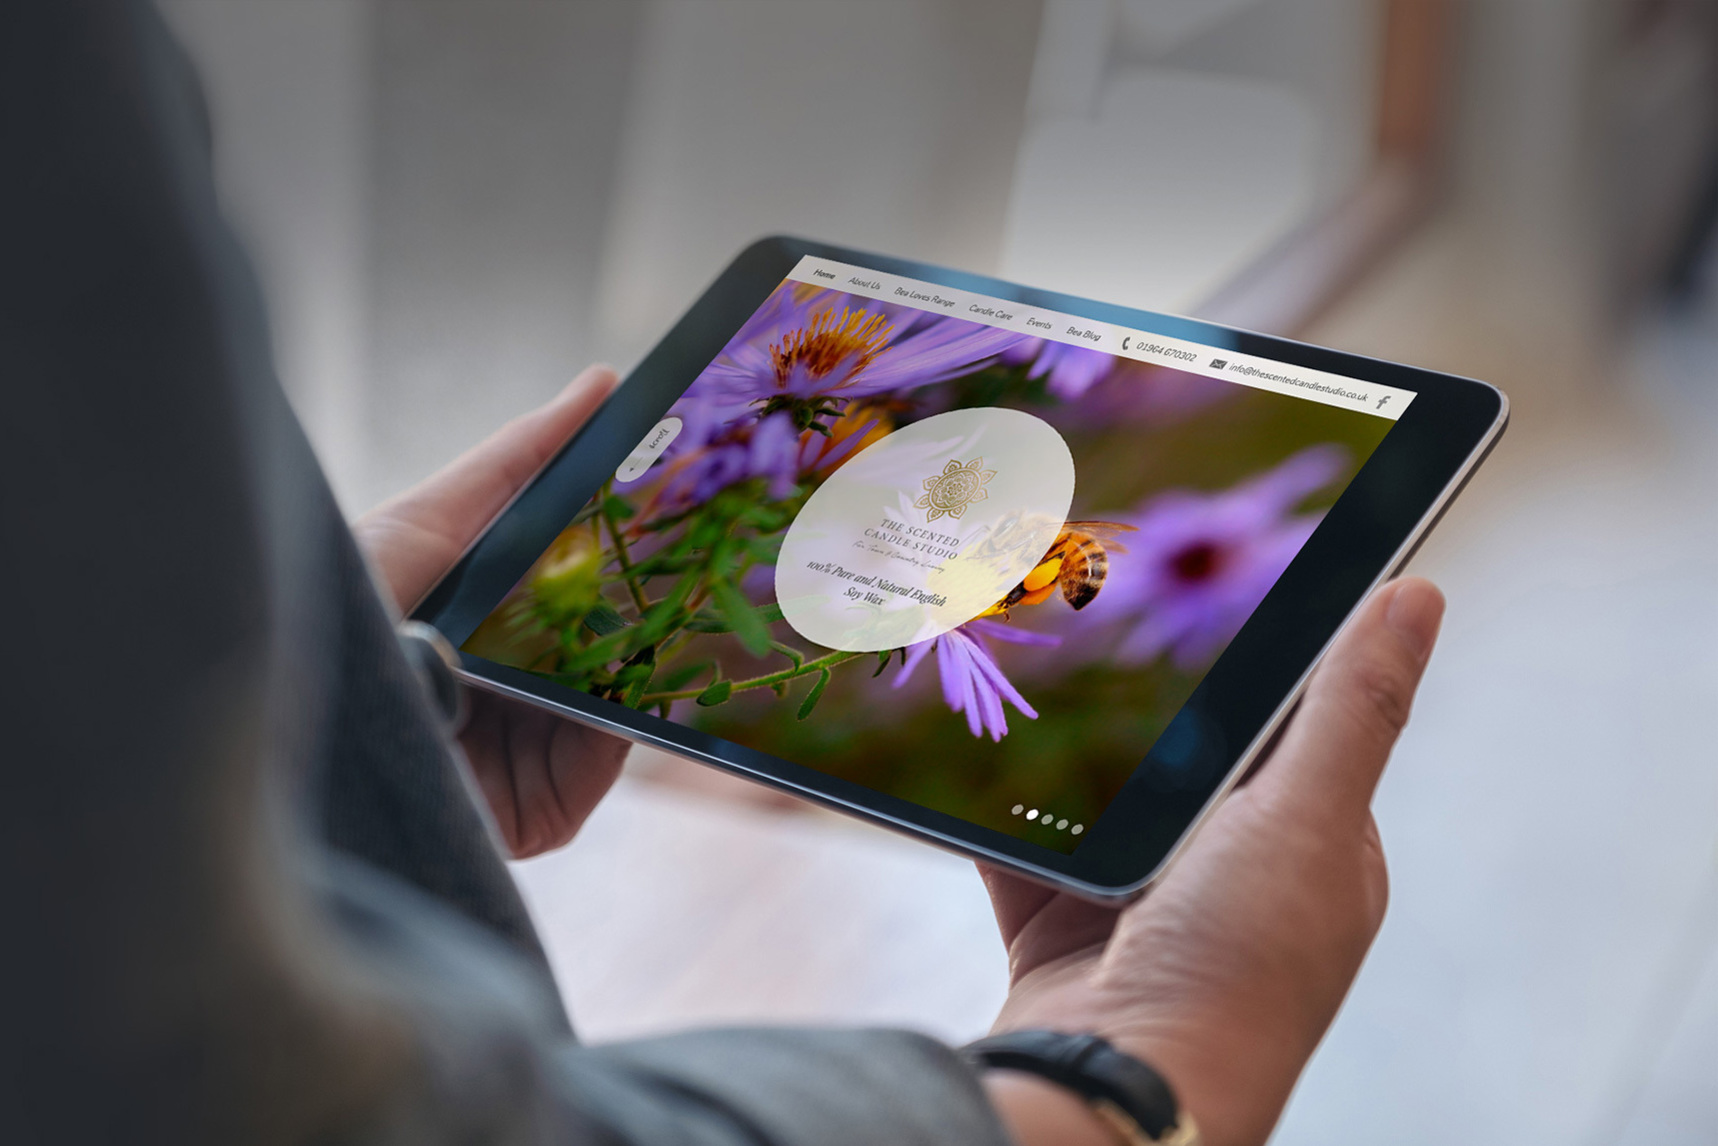 A website design shown on a tablet